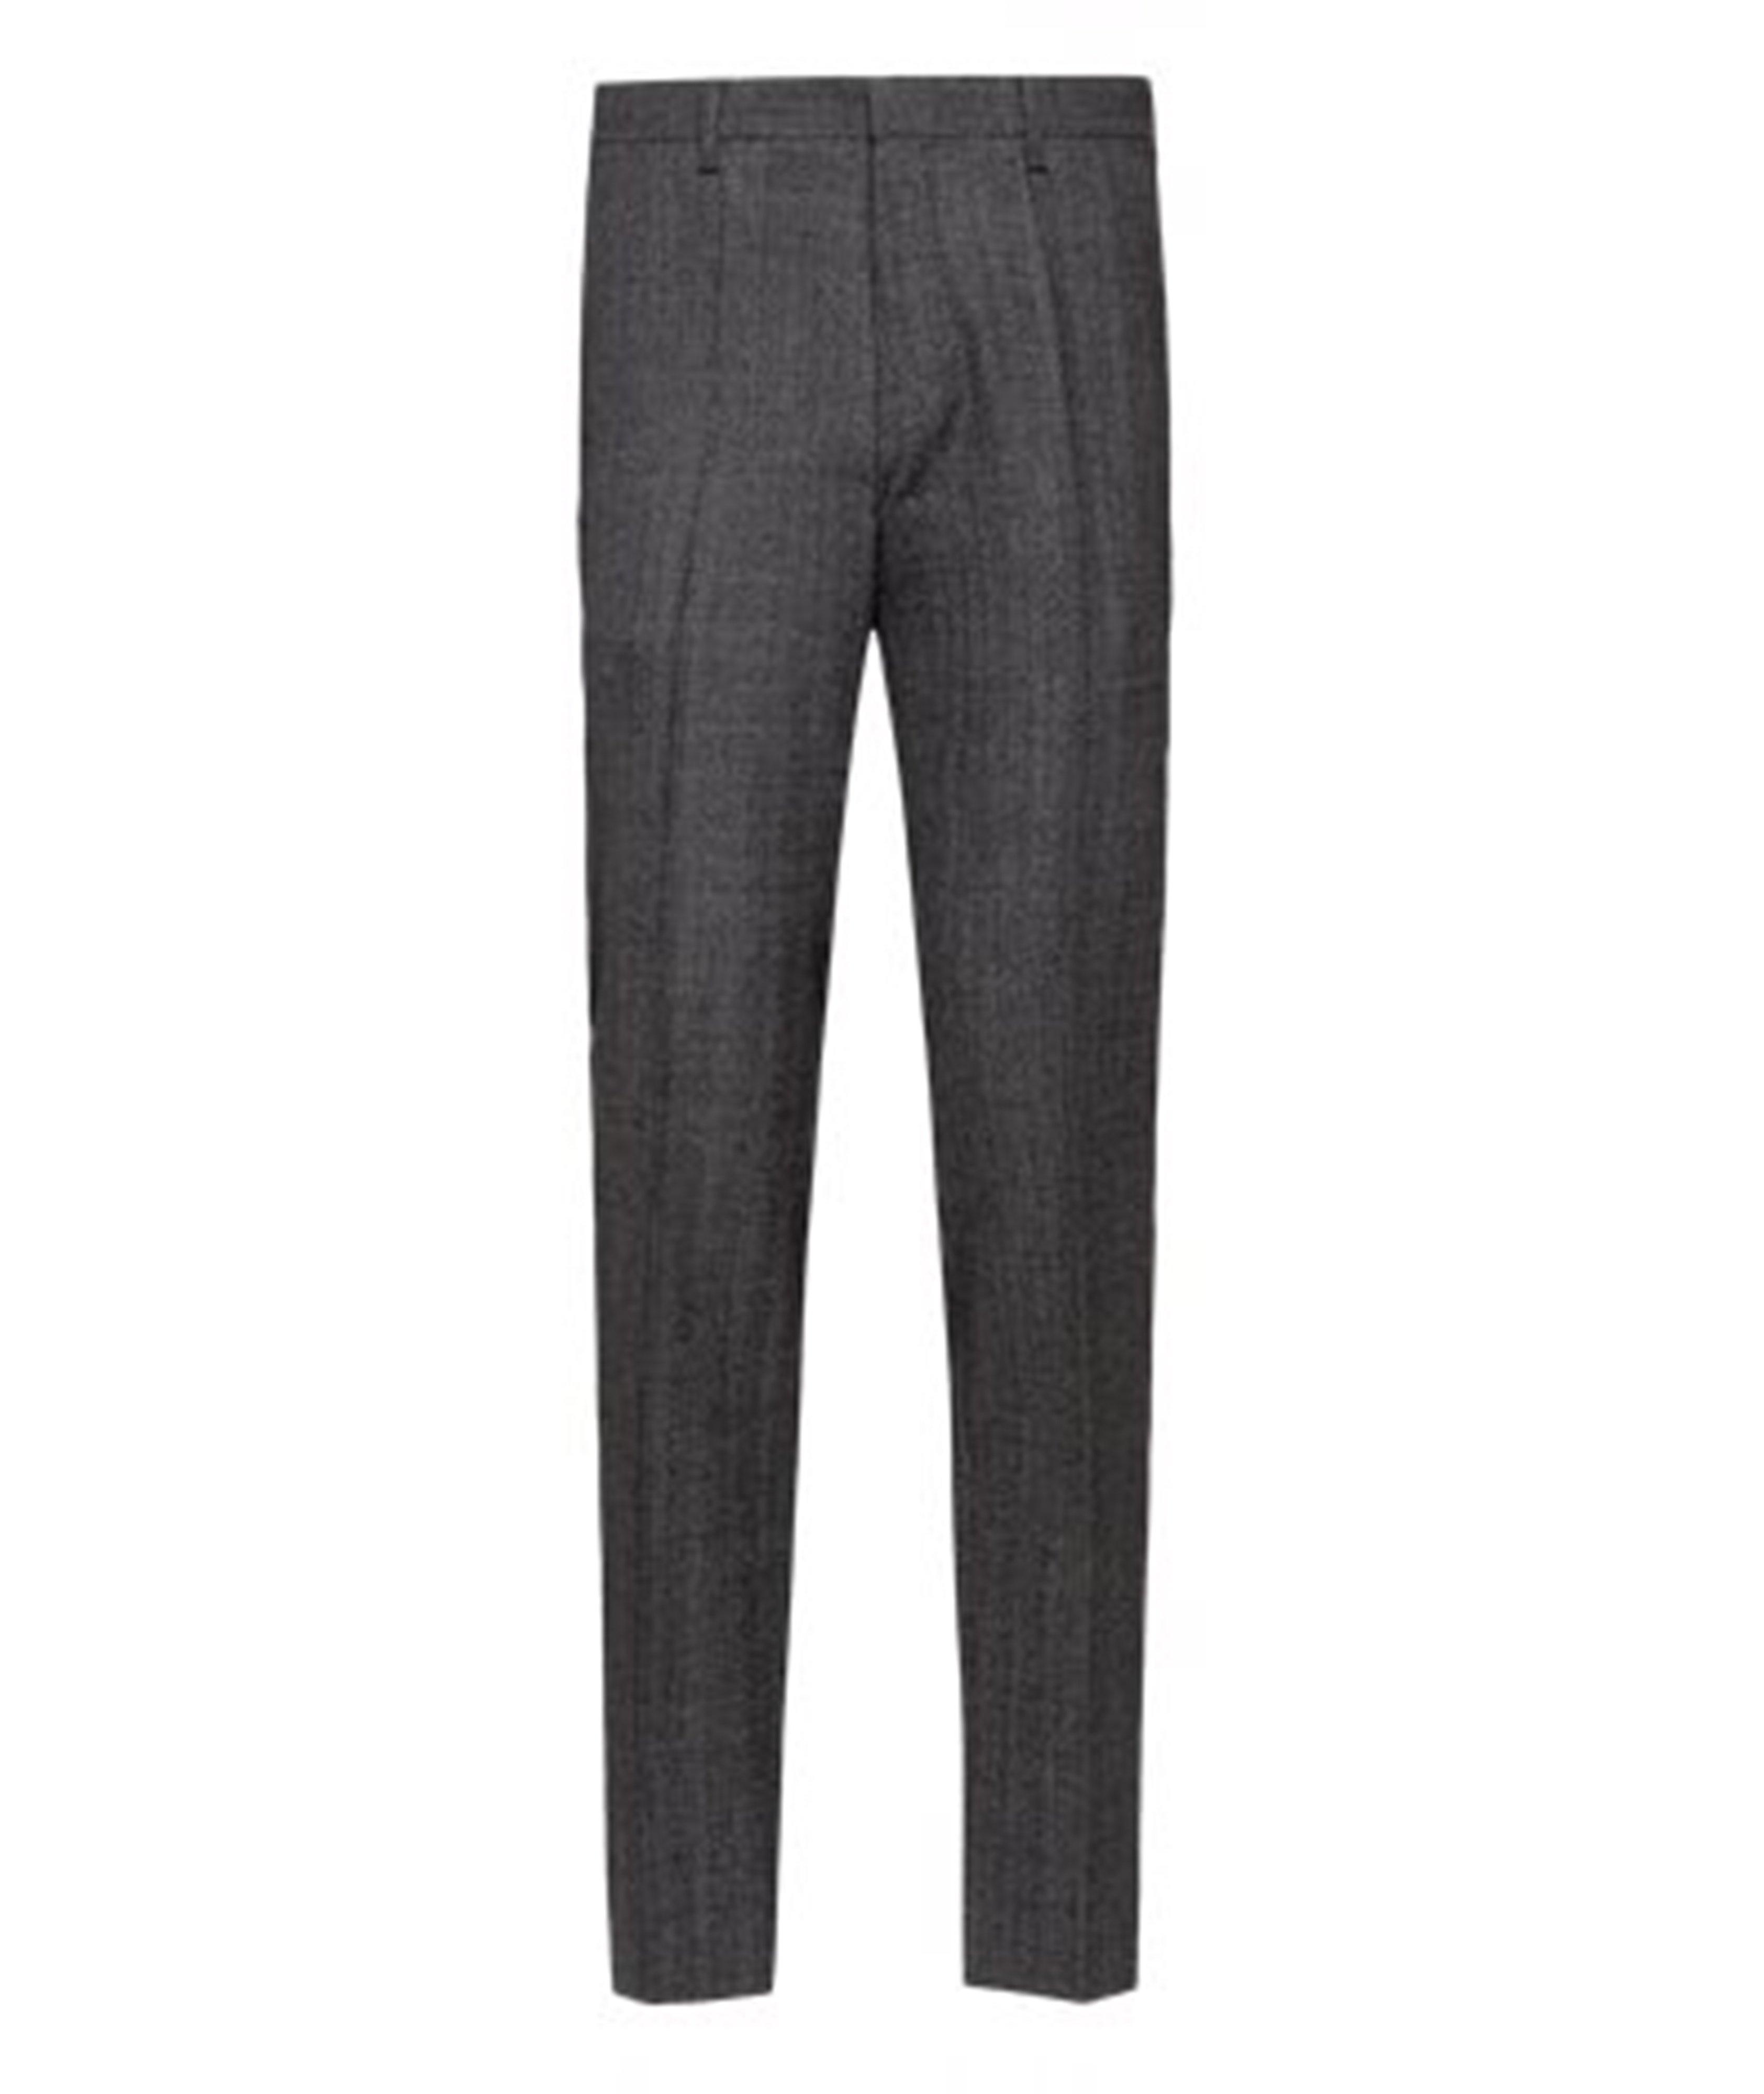 Genius5 Slim-Fit Herringbone Dress Pants image 0